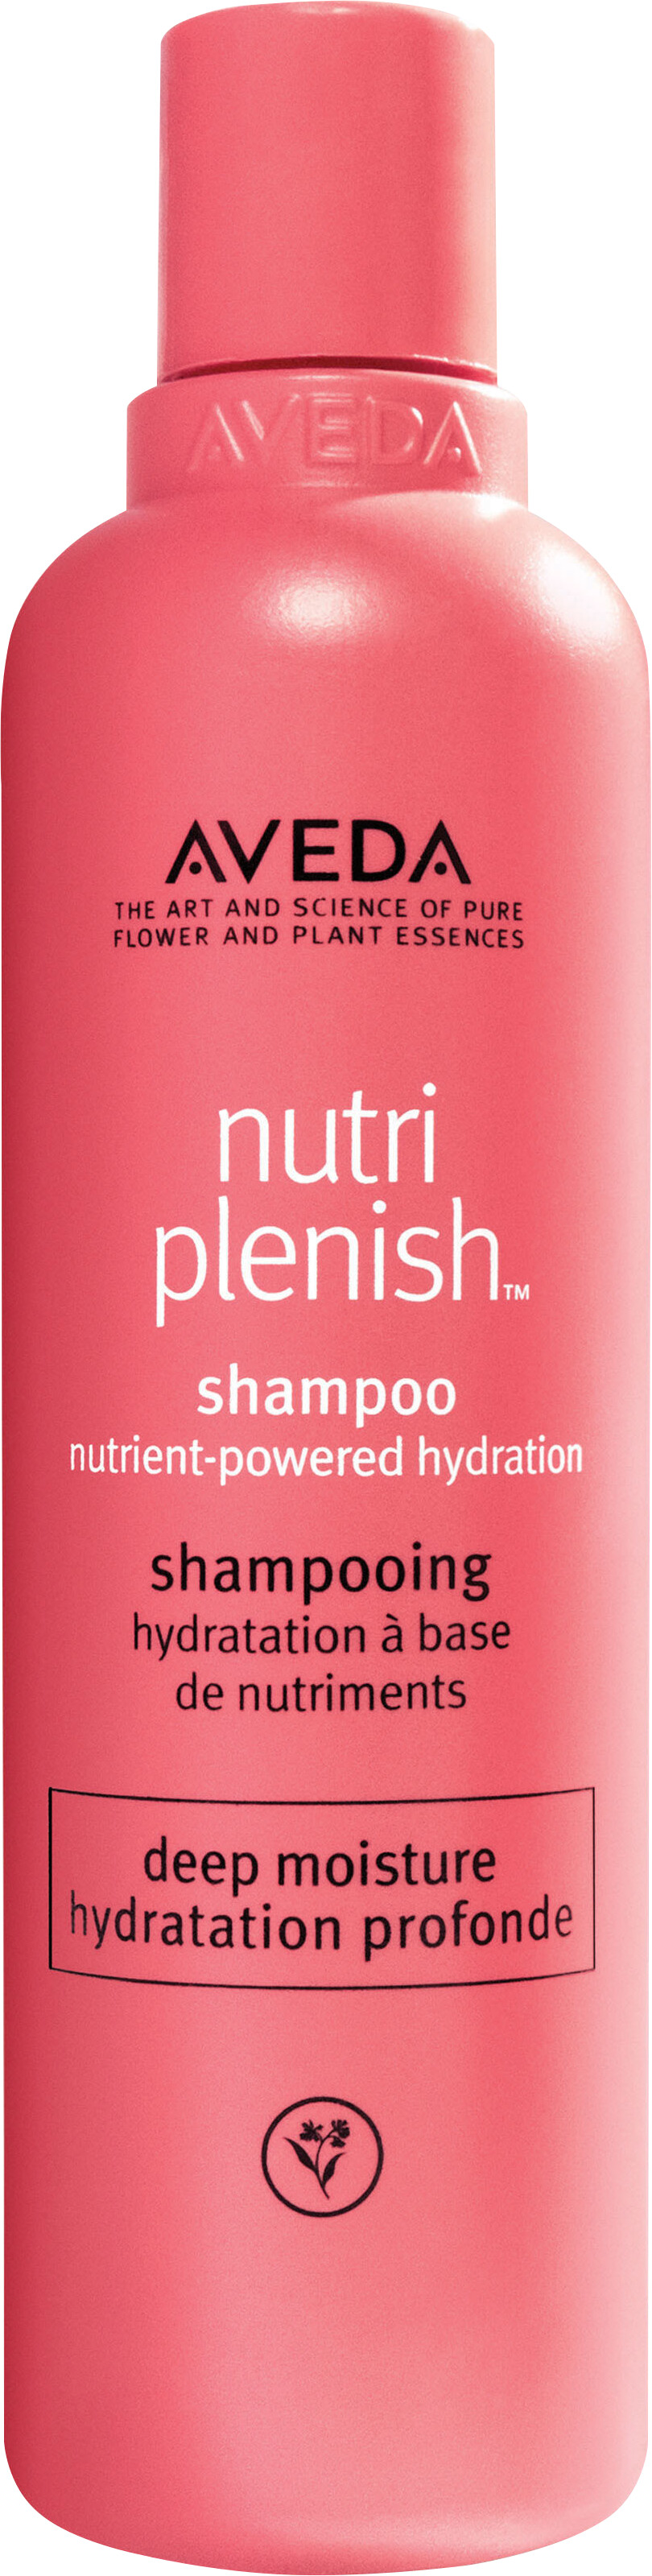 Aveda Nutriplenish Shampoo Deep Moisture 250ml